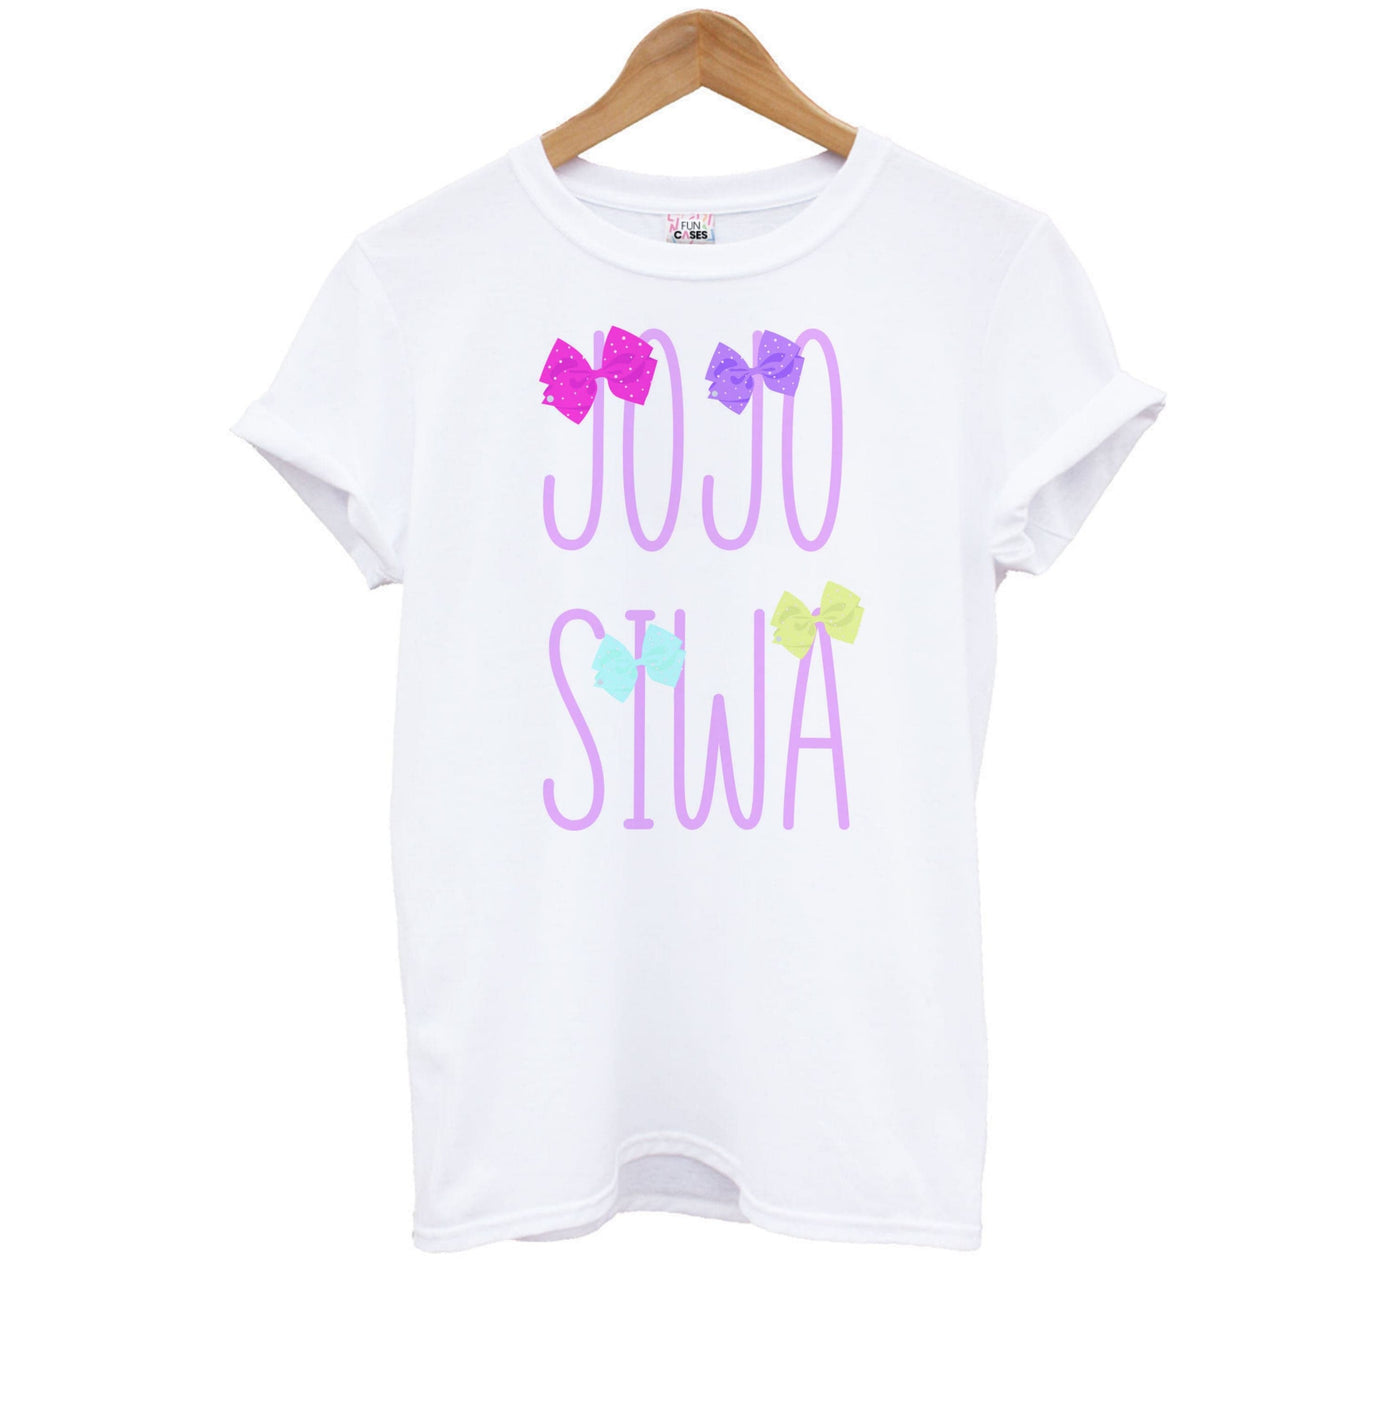 Name - JoJo Siwa Kids T-Shirt